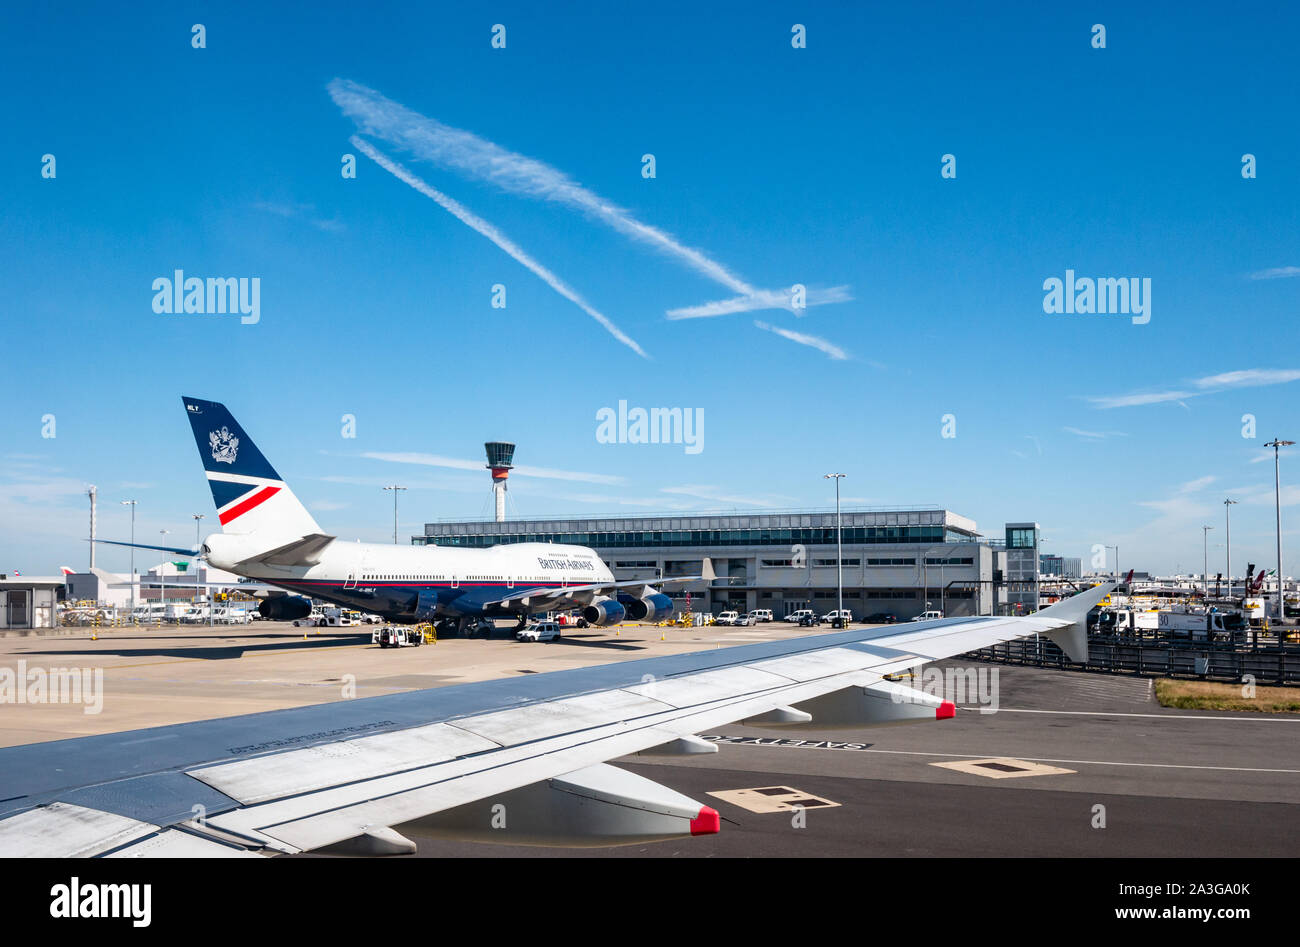 View from plane window of airport apron with British Airways Jumbo Jet, Terminal 5, Heathrow Airport, London, England, UK Stock Photo